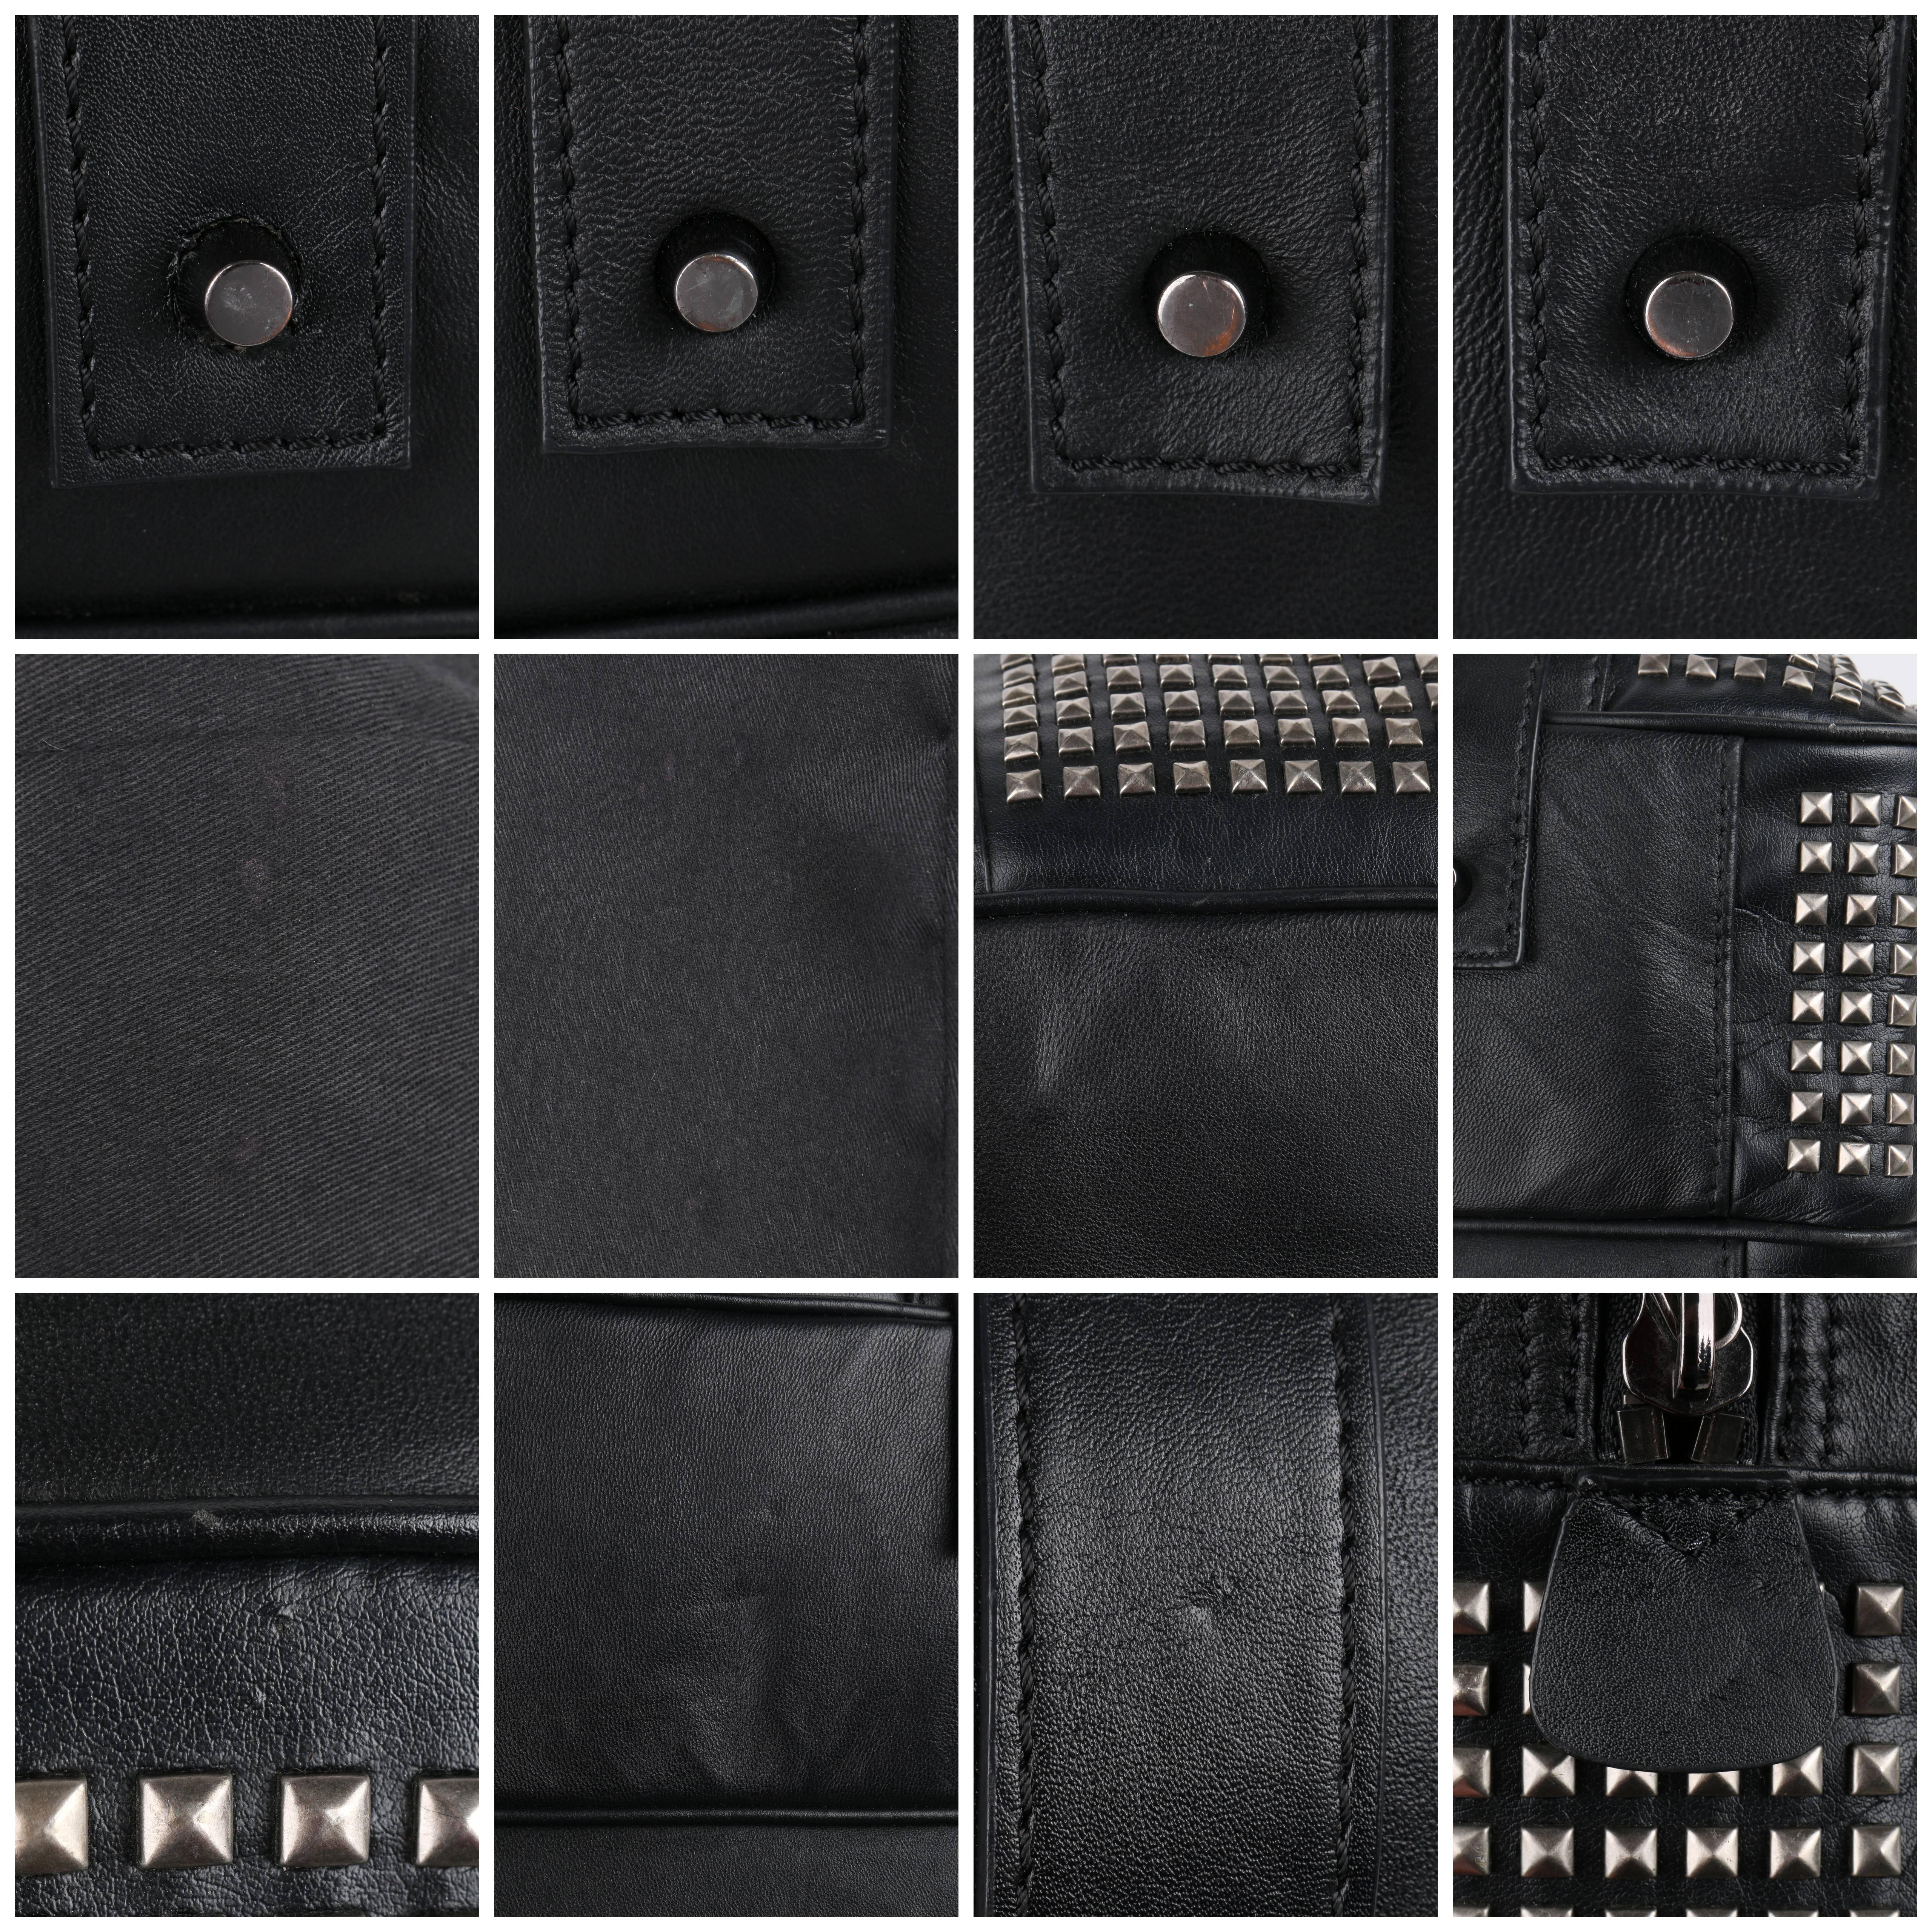 BURBERRY Prorsum A/W 2007 Runway Black Leather Knight Studded Satchel Bag Purse 2